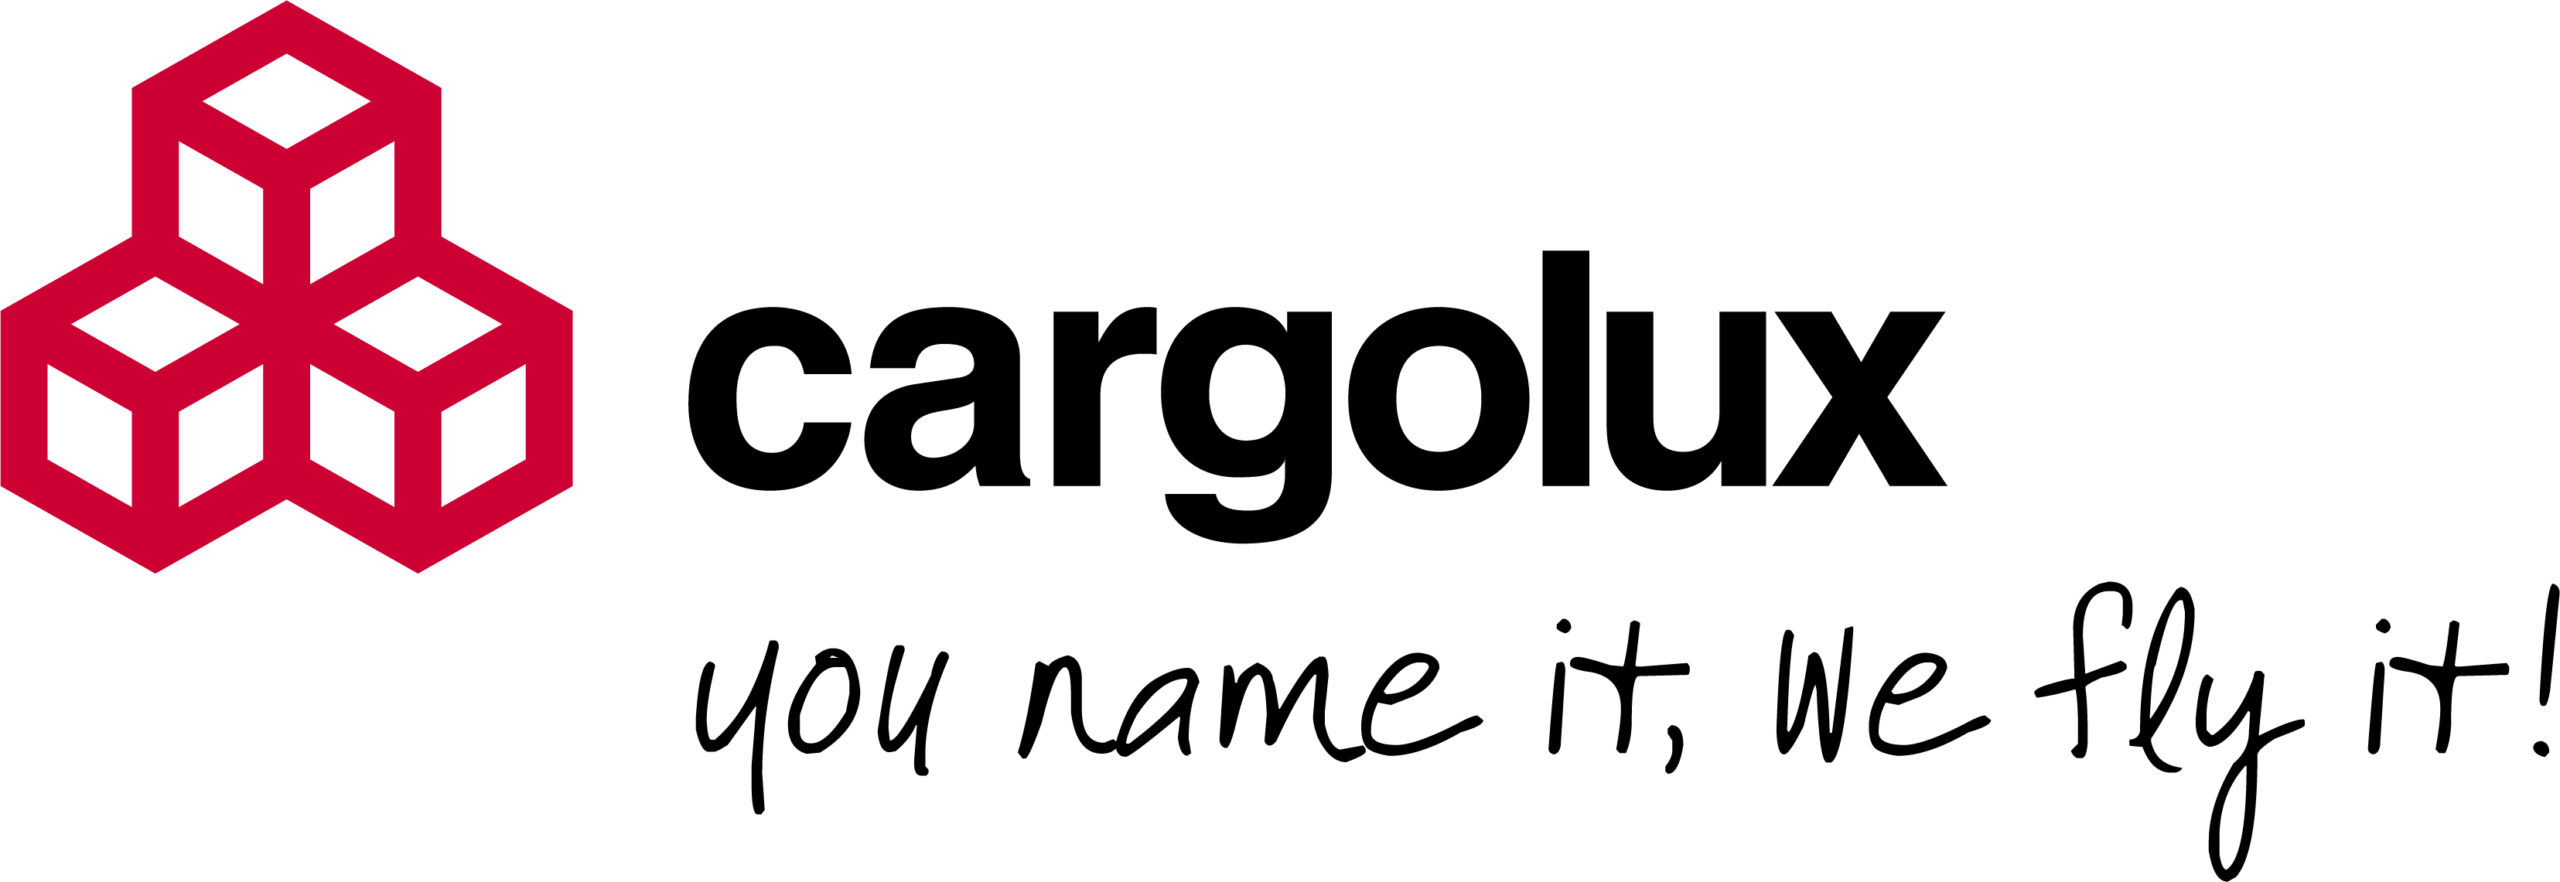 Cargolux Airlines International S.A.